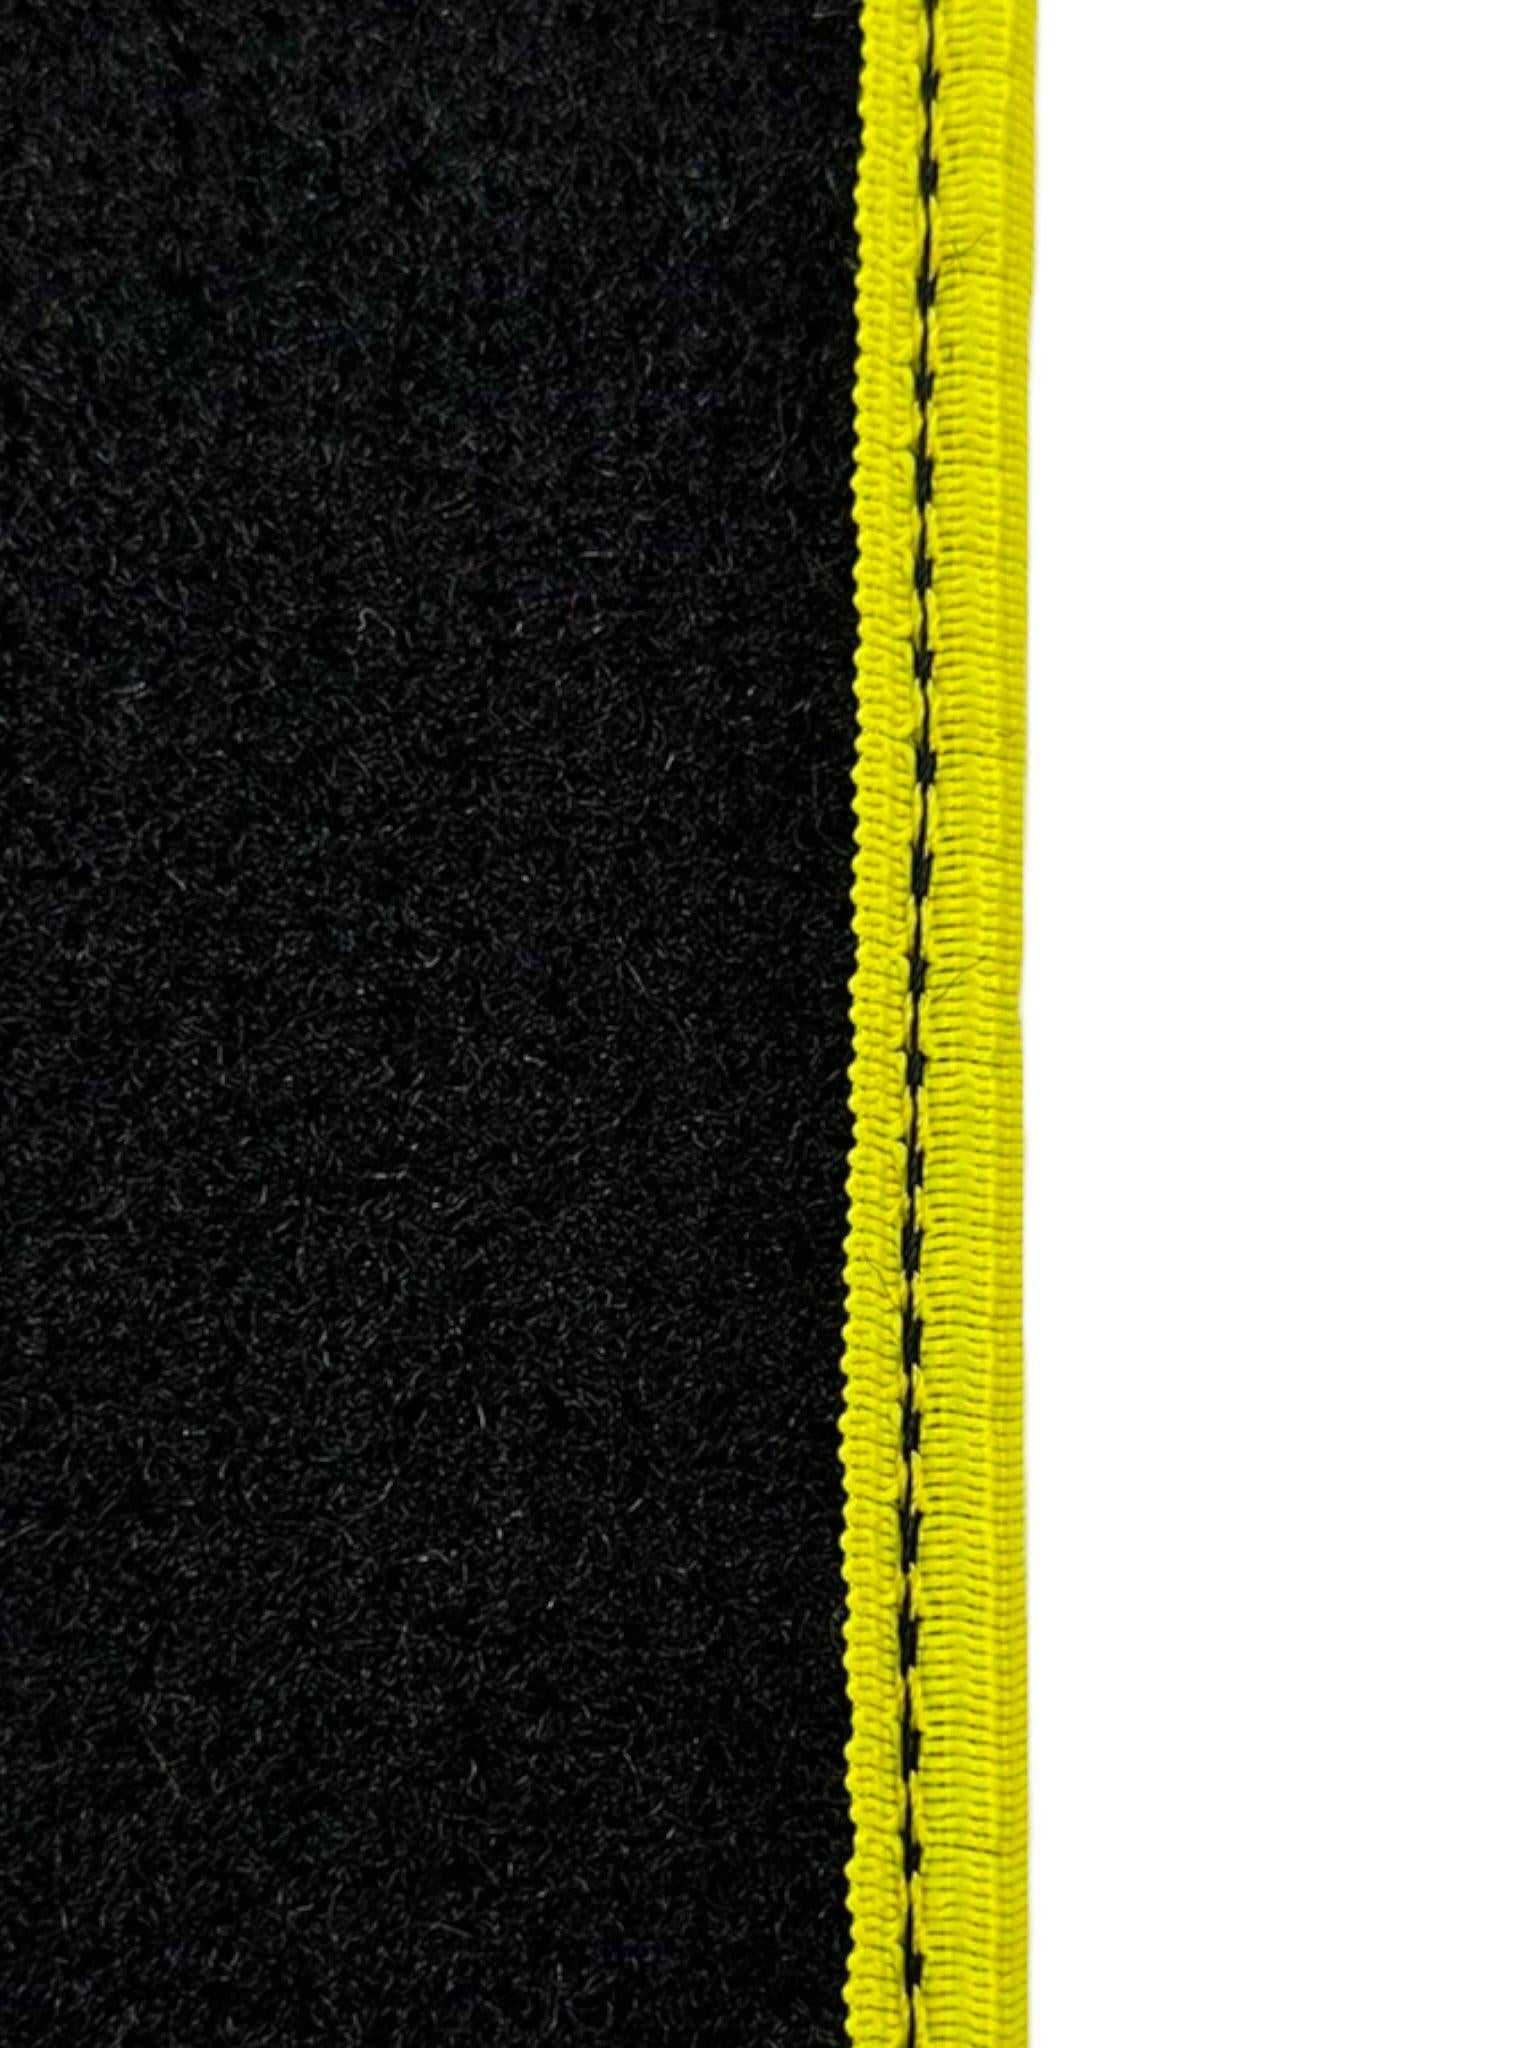 Carbon Fiber Leather Floor Mats For Ferrari California T Convertible (2008-2014) with Yellow Trim